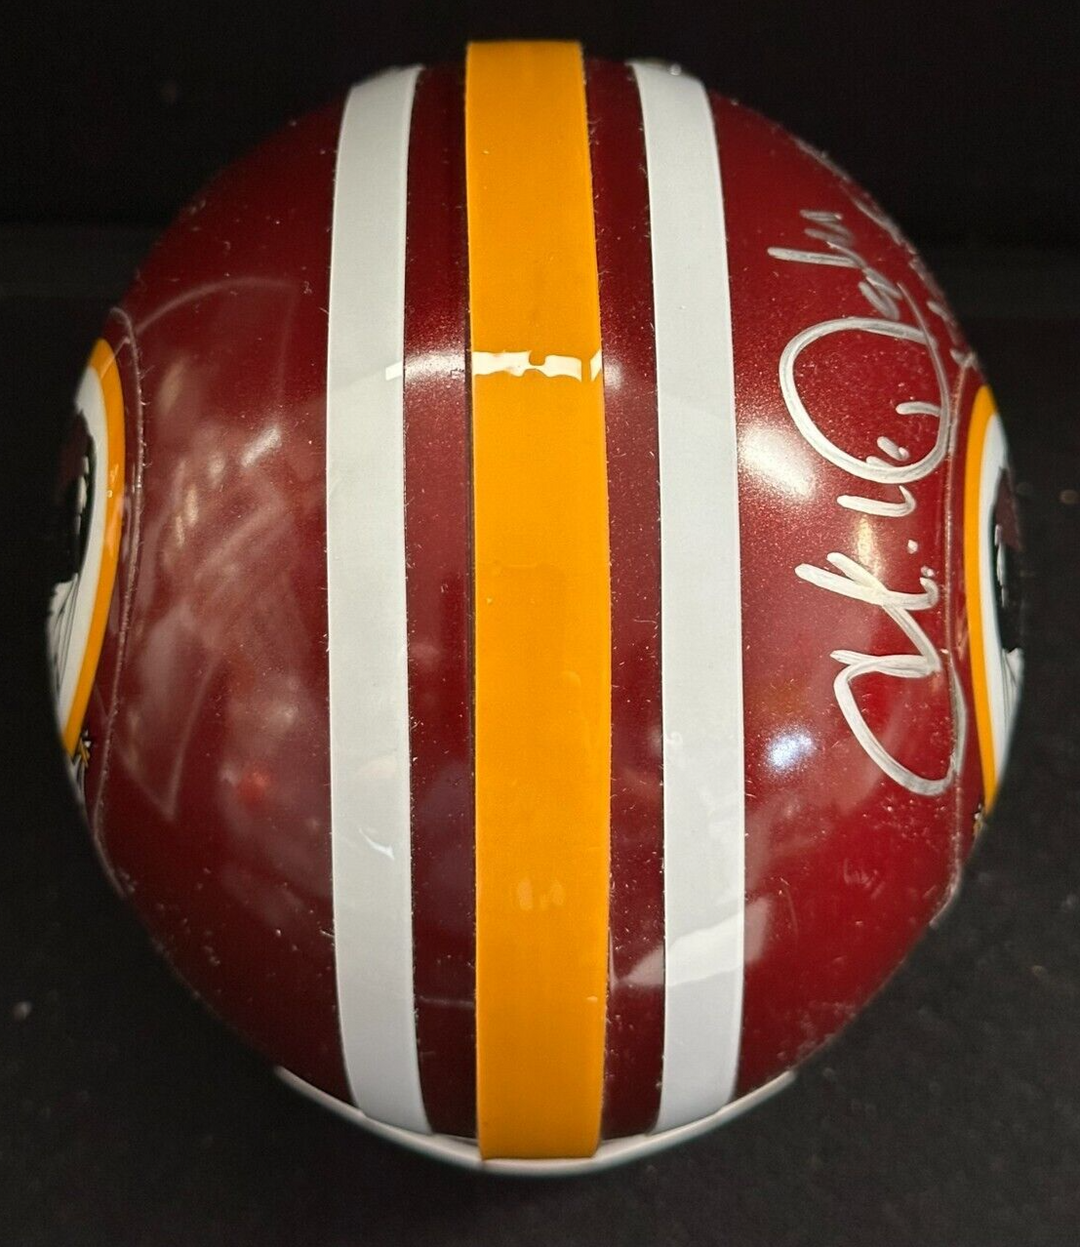 Charley Taylor Autographed Washington Redskins Mini Helmet W/ HOF 84 d. 2022